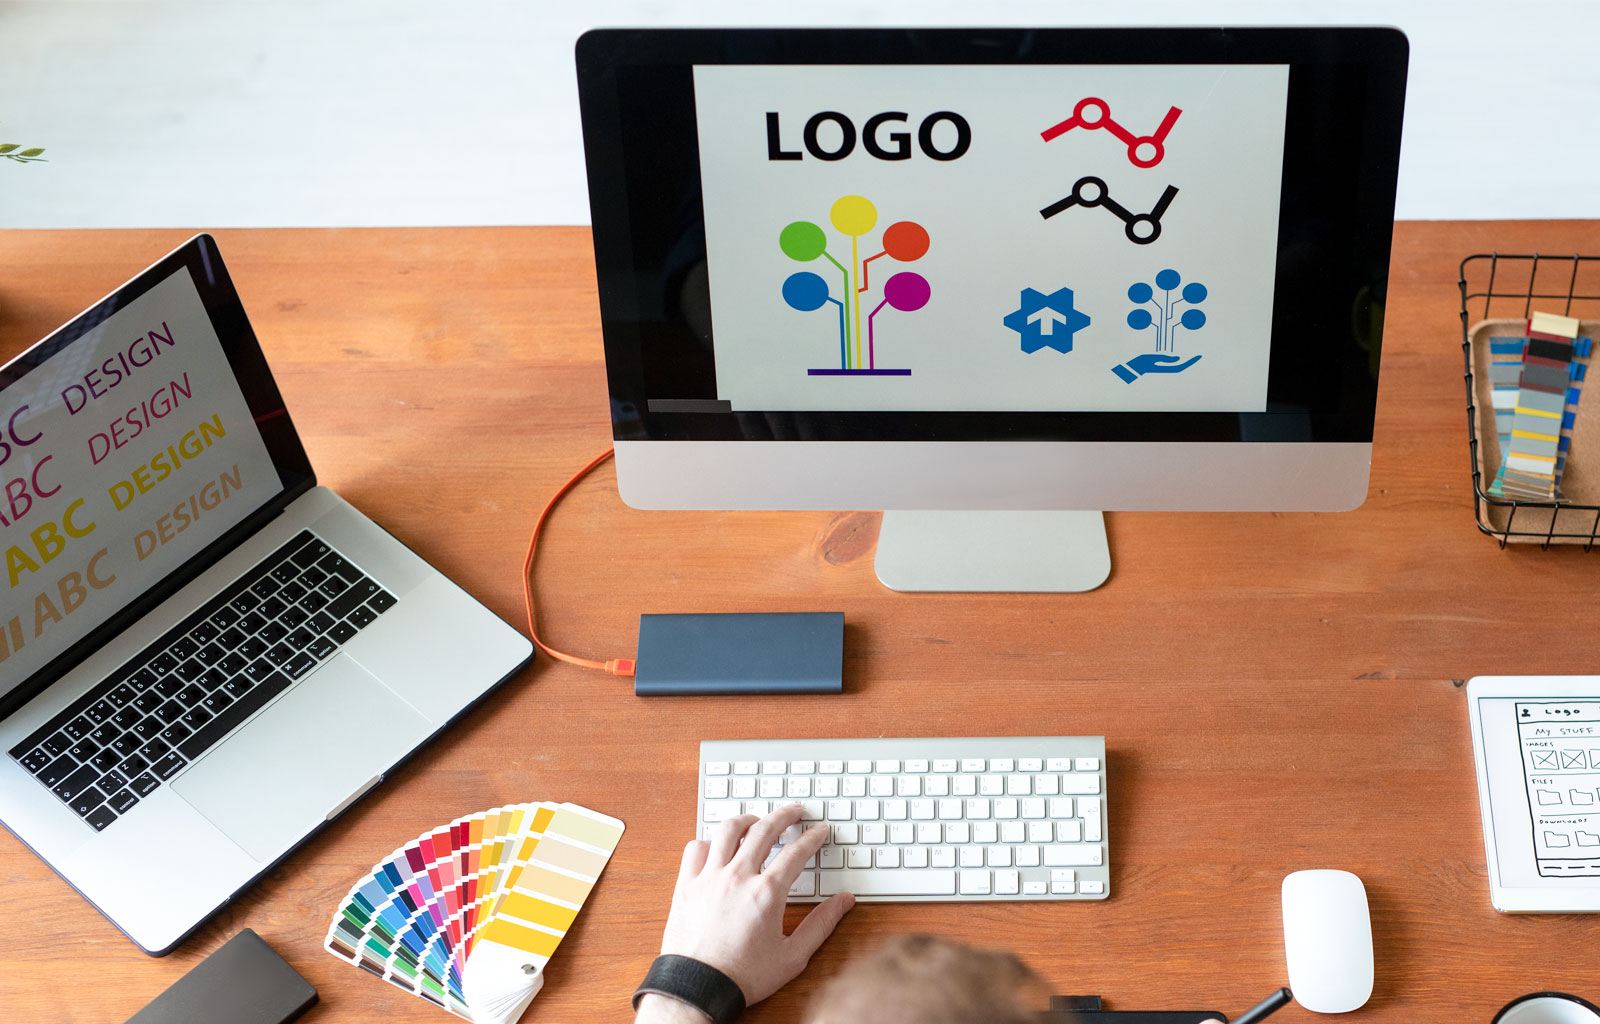 Graphic designer creating logo designs on an imac